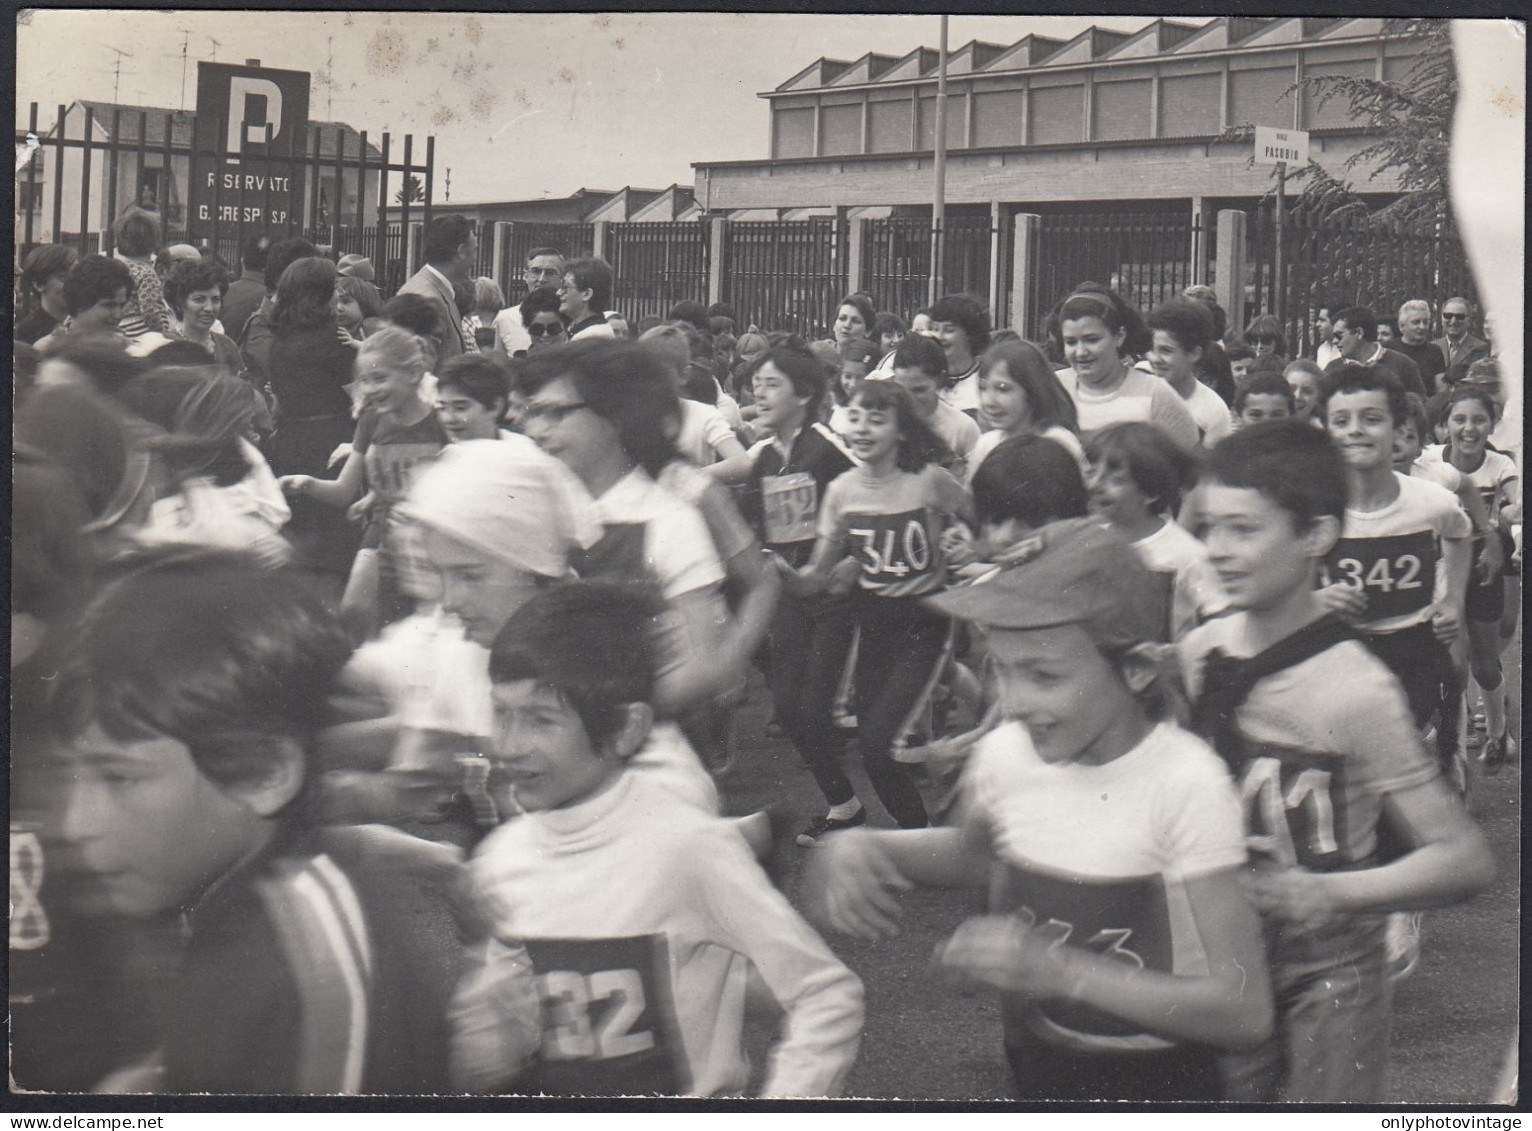 Legnano 1977 - Scena Di Una Gara Podistica Studentesca - Fotografia - Lieux